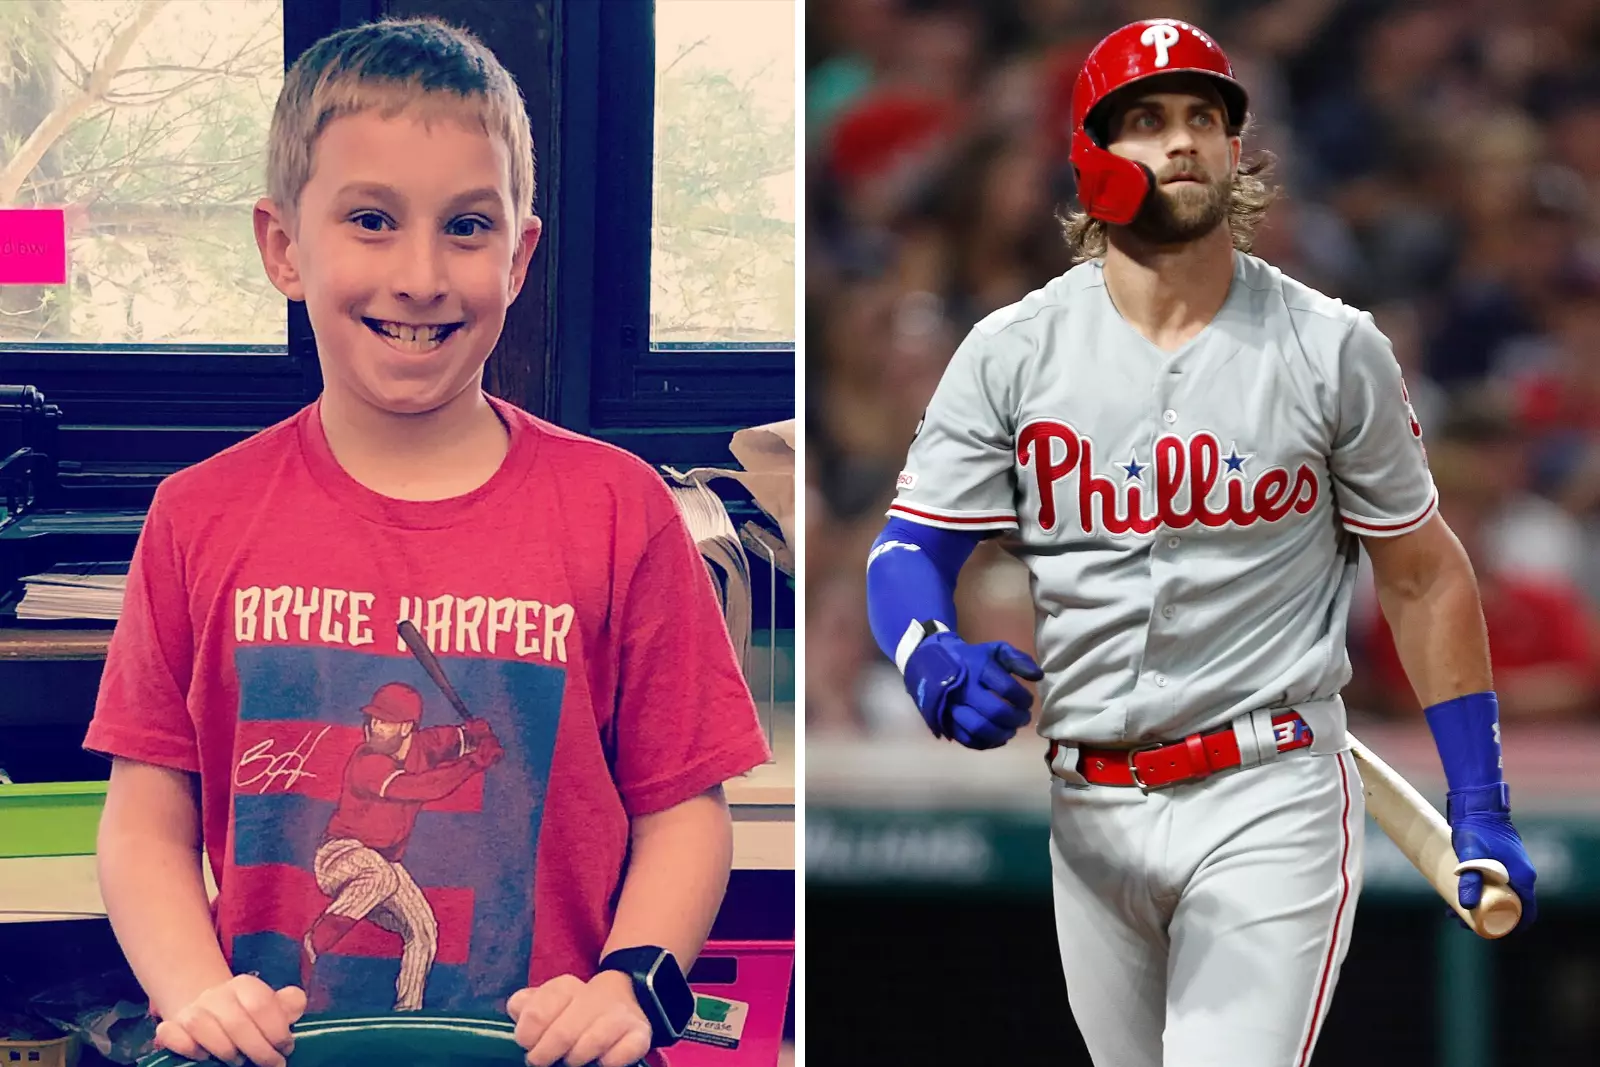 Help Hamilton Boy Meet His Idol, Phillies Star Bryce Harper